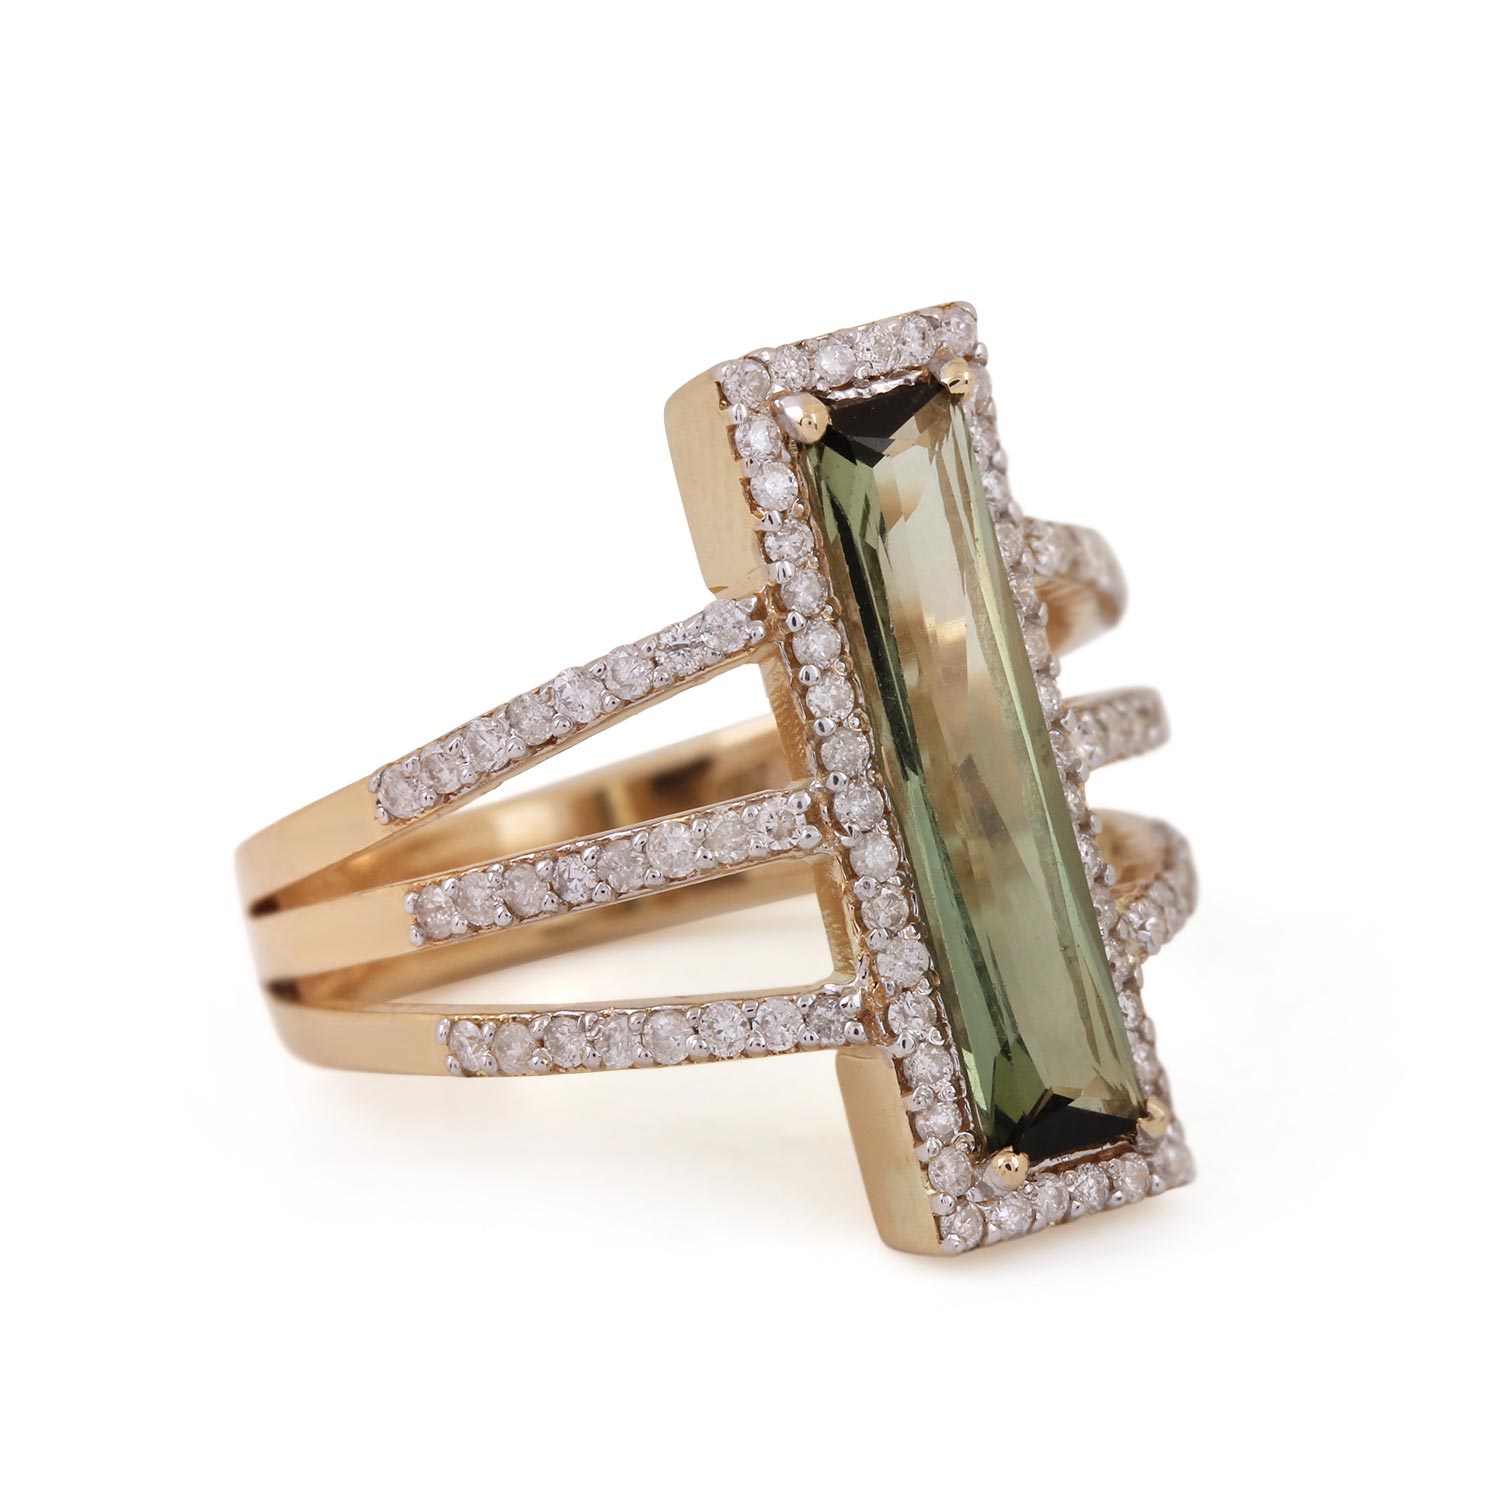 14K Solid Gold Pave Diamond Ring Tourmaline Gemstone Jewelry